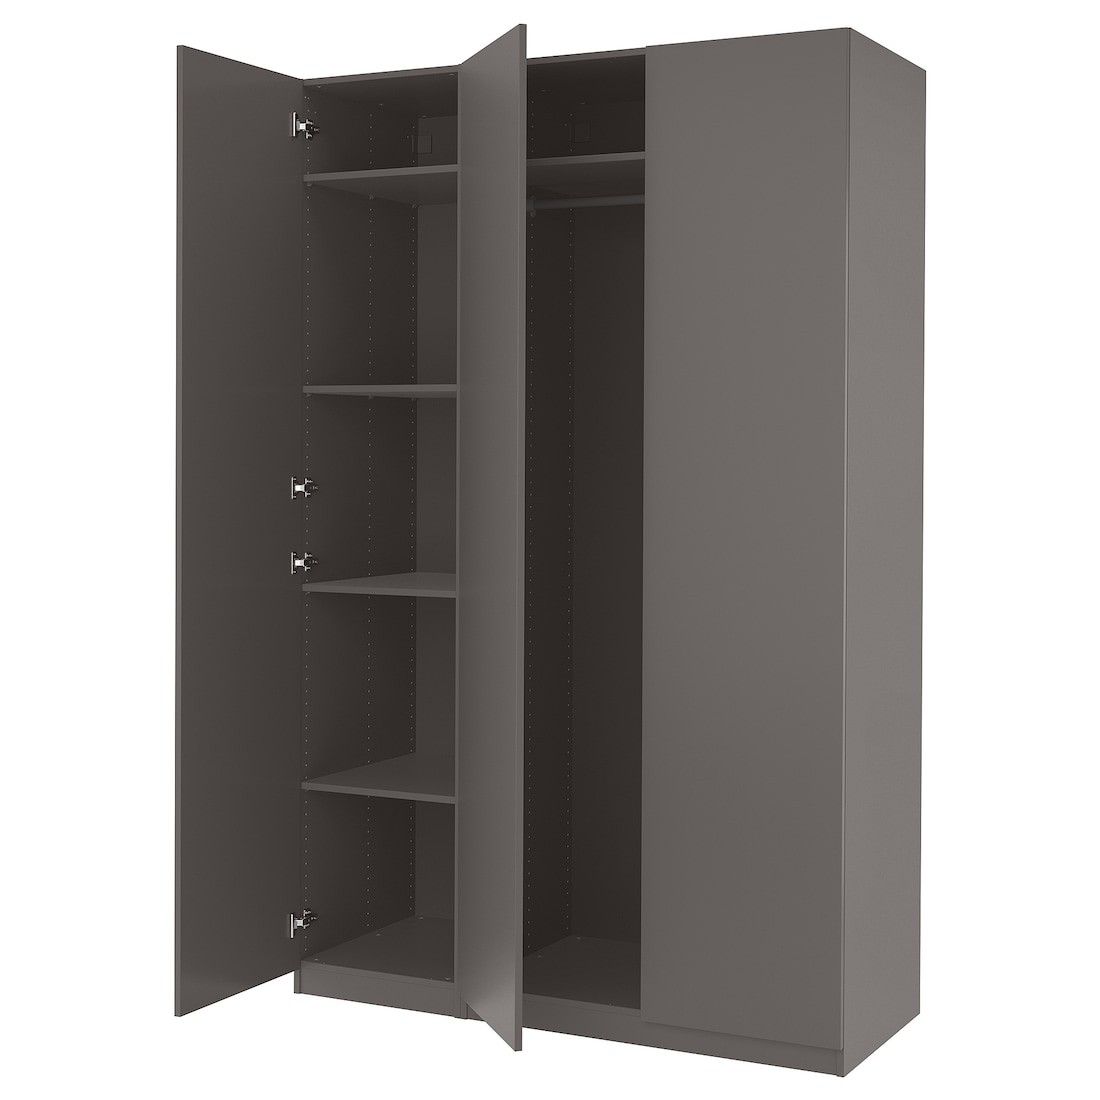 PAX ПАКС / FORSAND ФОРСАНД Комбинация шкафов, темно-серый / темно-серый, 150x60x236 см